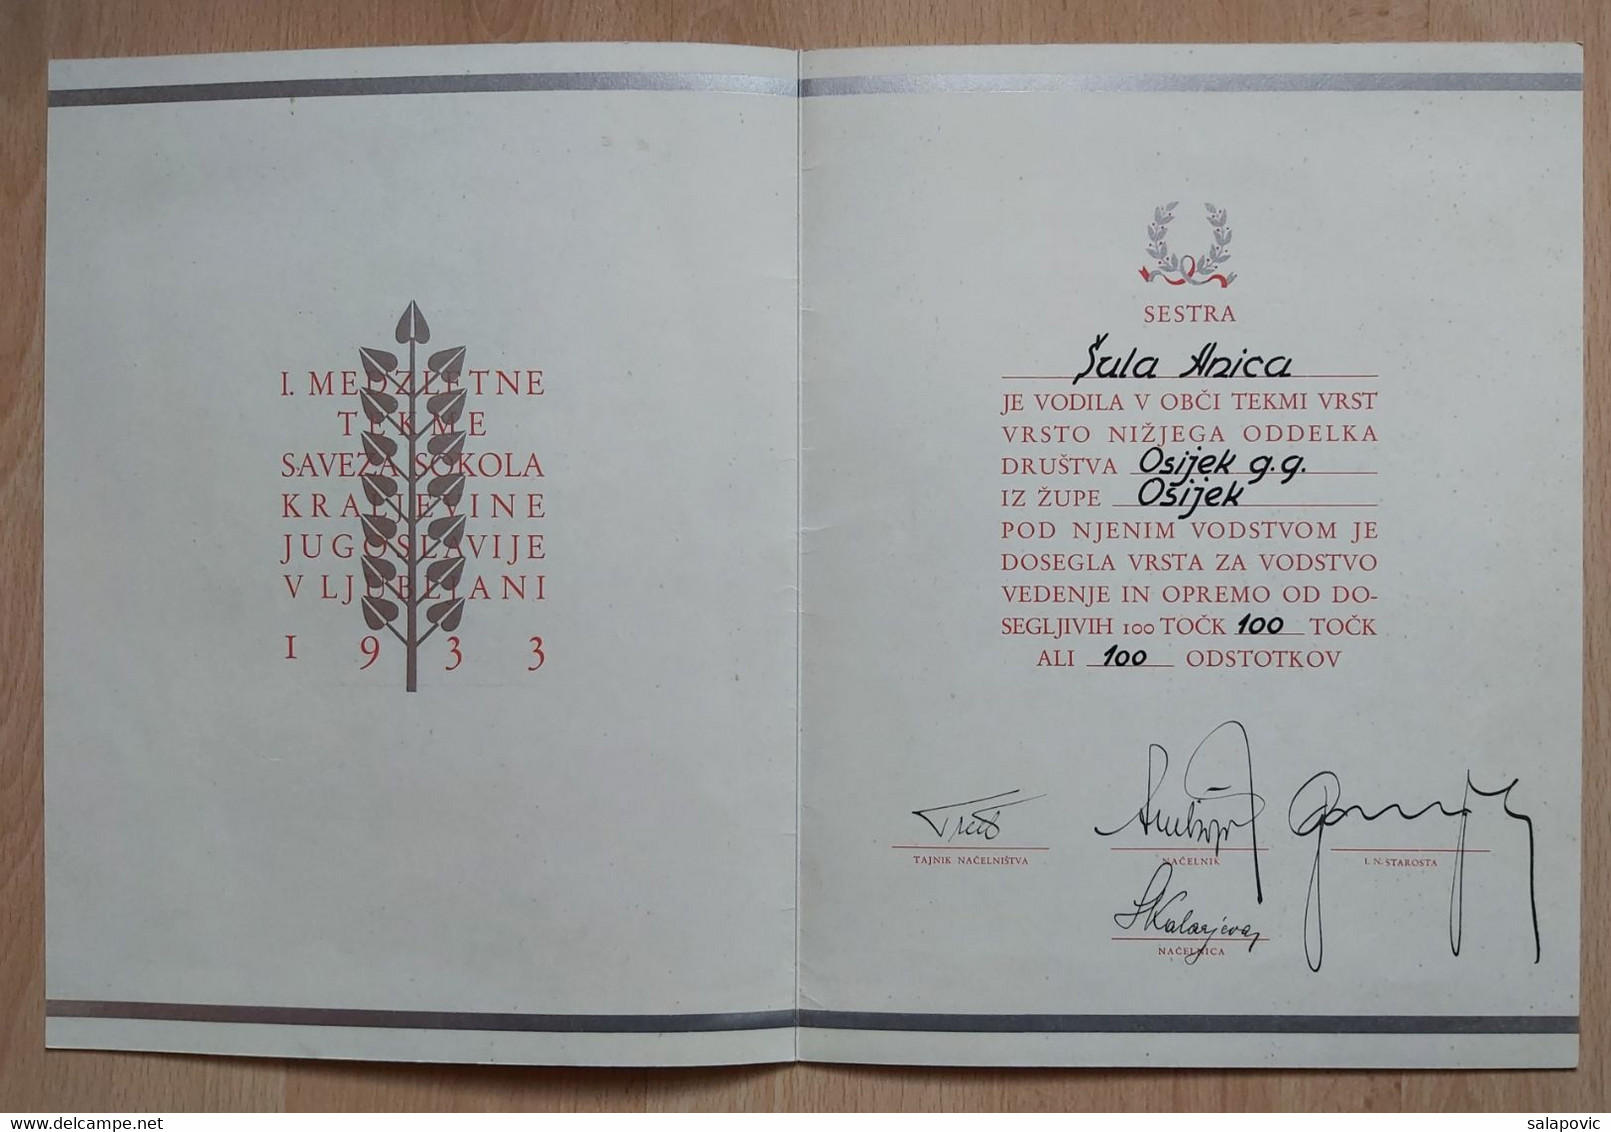 Sokol, Kingdom Of Yugislavia Ljubljana, Slovenia1933  Certificate - Gymnastique